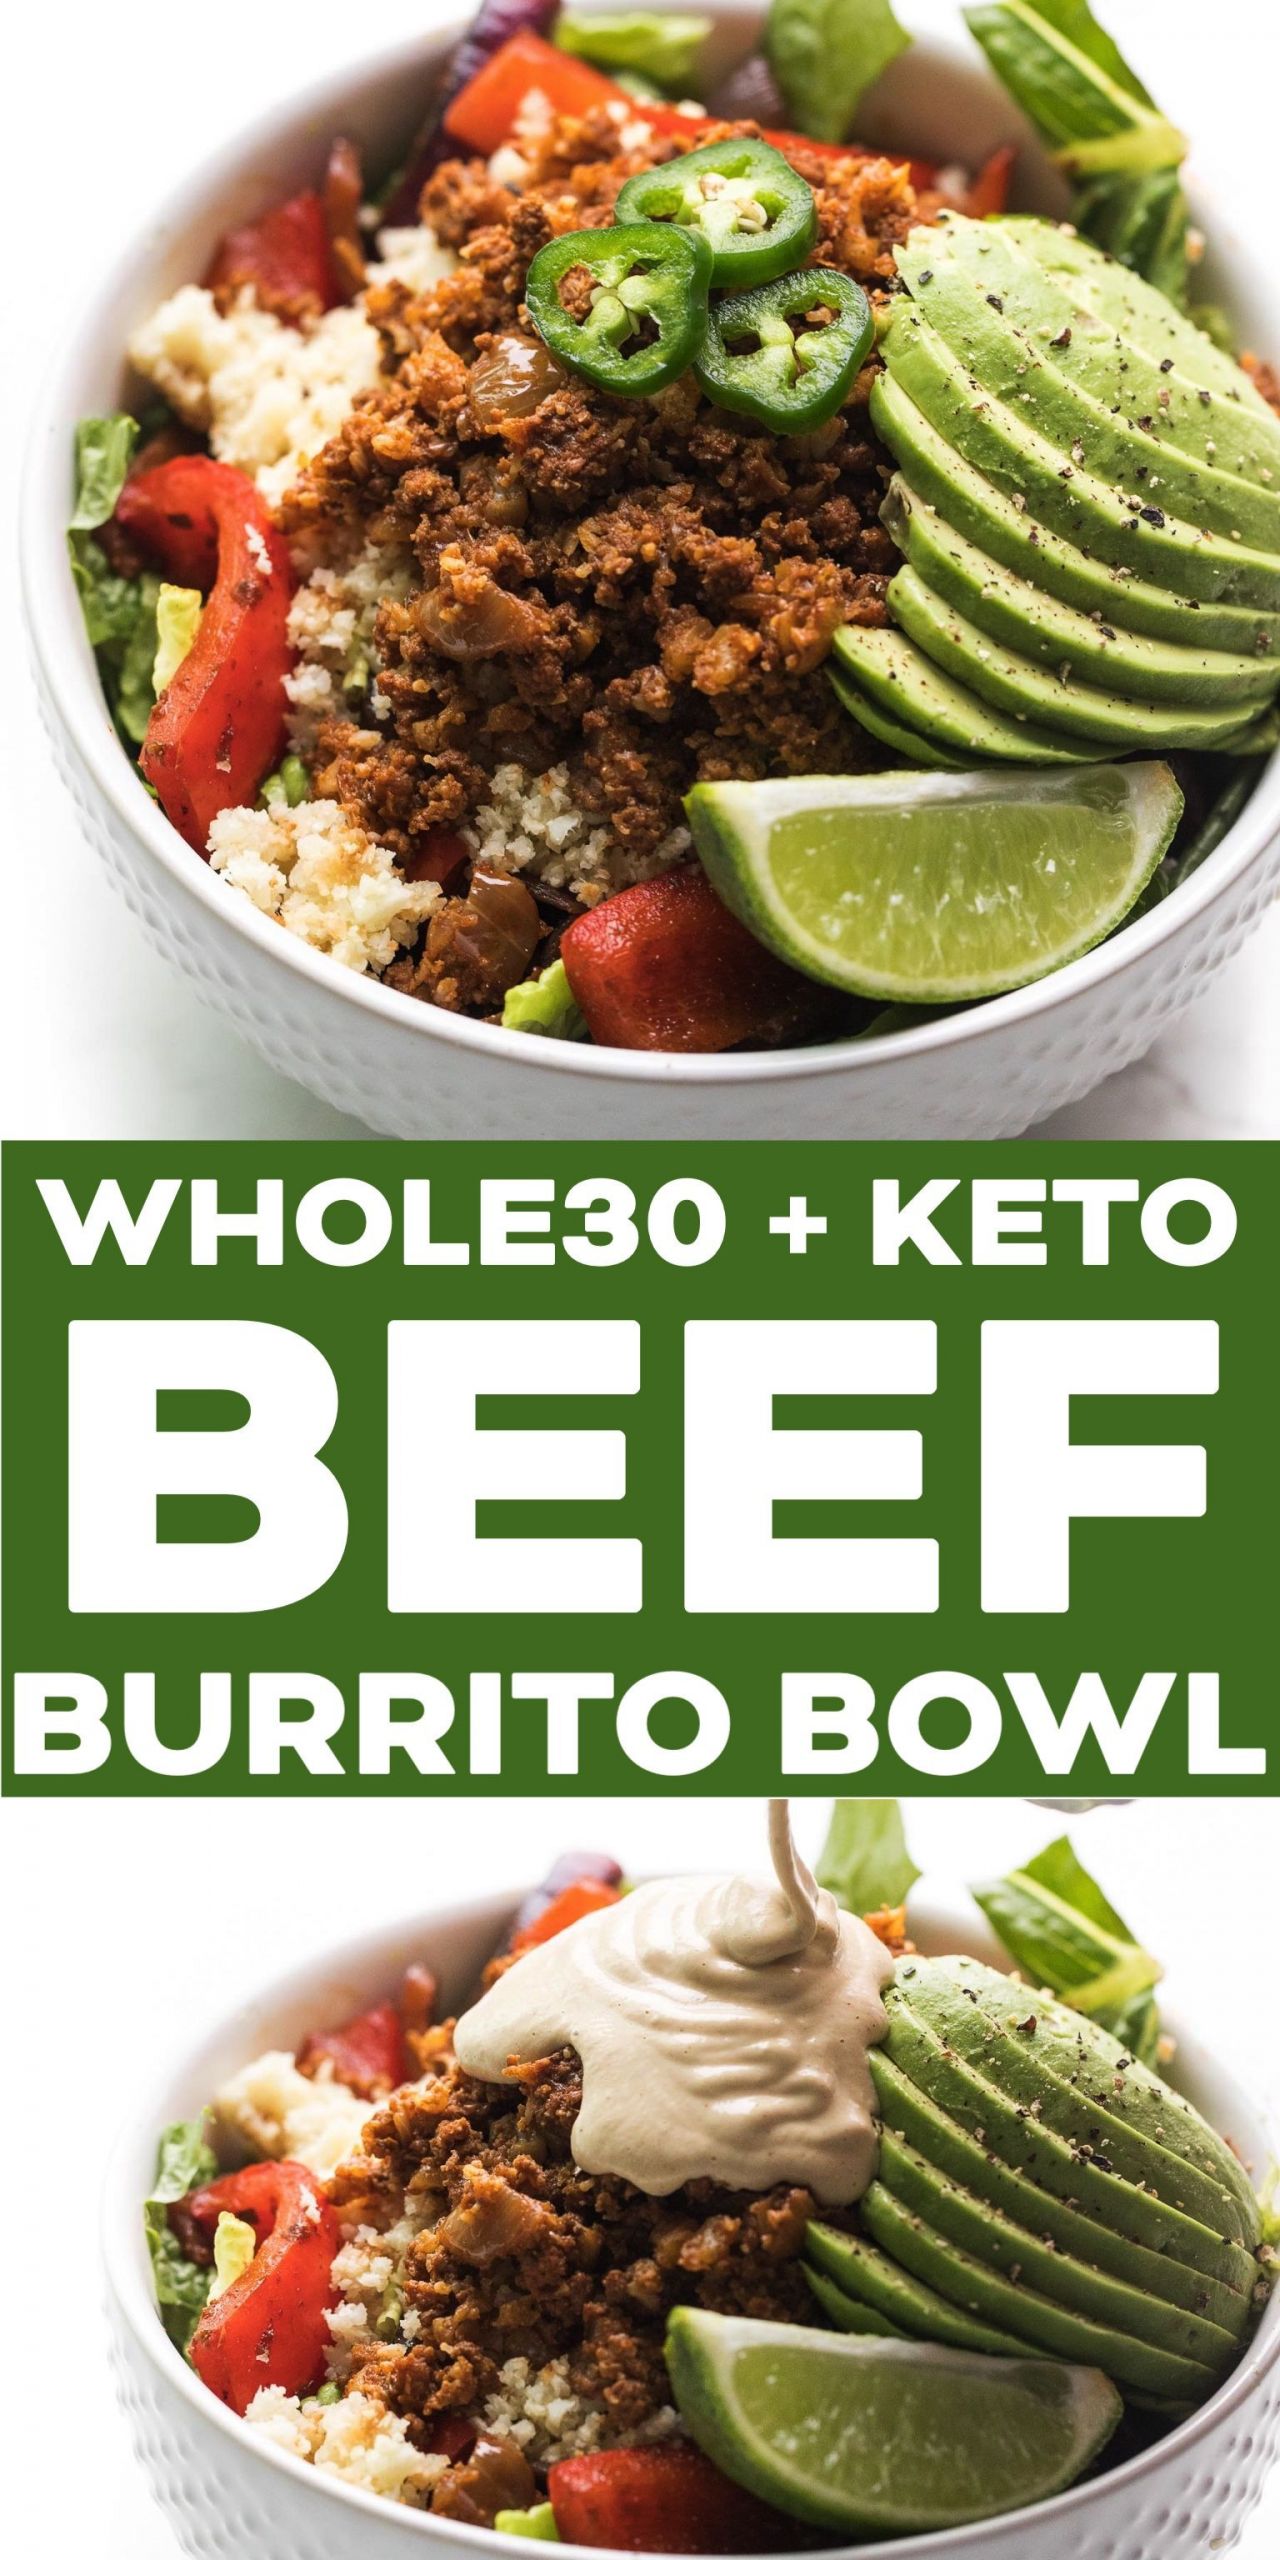 Dairy Free Keto Ground Beef Recipes
 Whole30 Ground Beef Burrito Bowl Recipe Keto Paleo